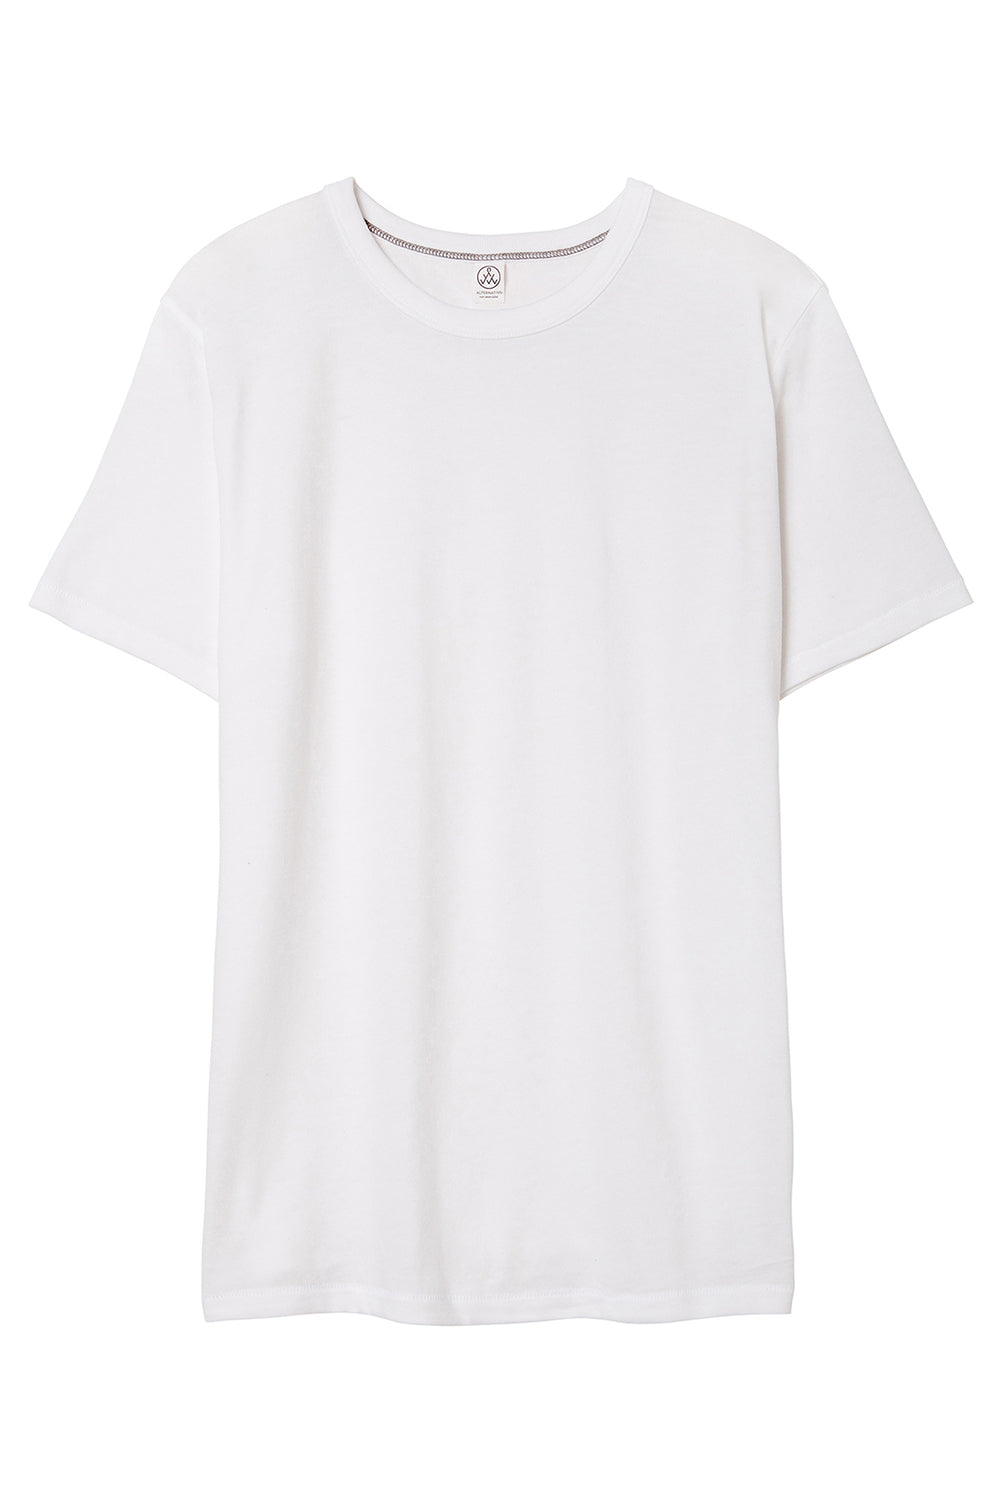 Alternative AA5050/05050BP/5050 Mens The Keeper Vintage Short Sleeve Crewneck T-Shirt White Flat Front